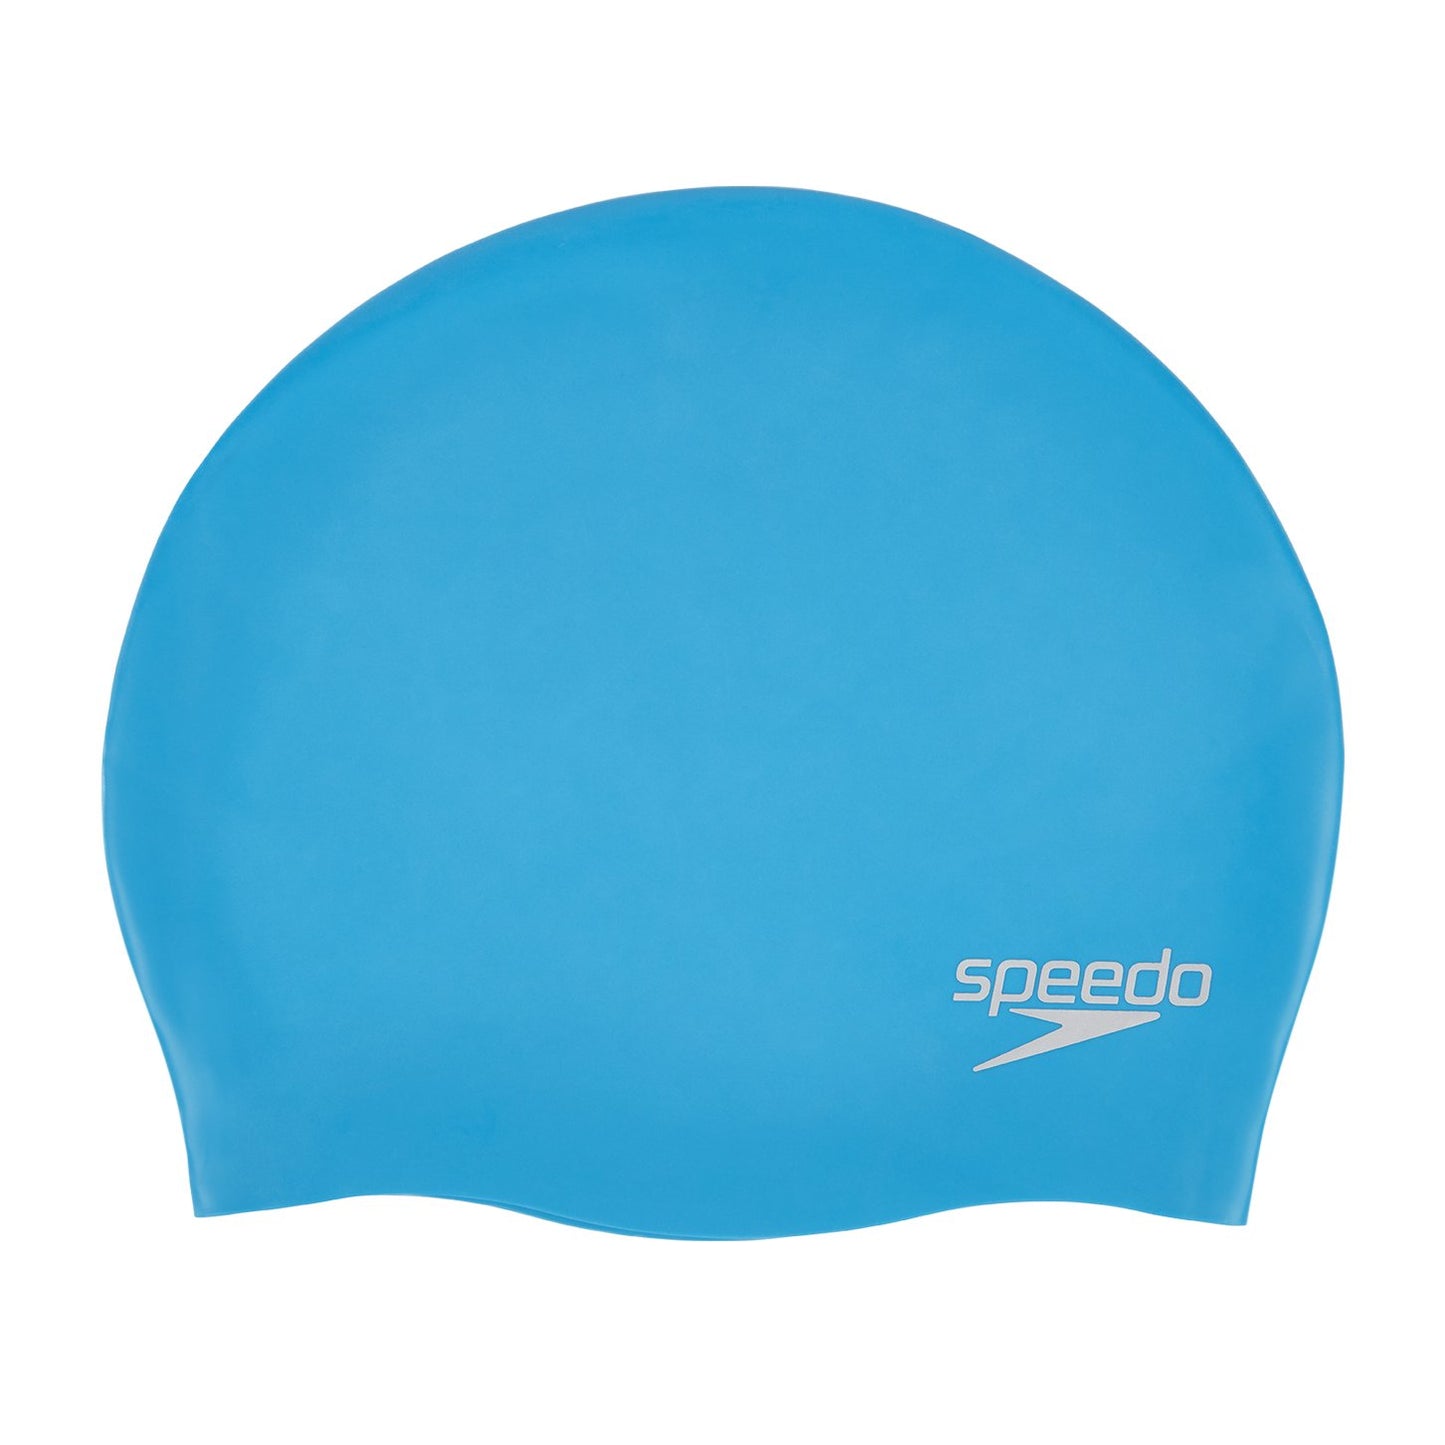 Speedo Plain Moulded Silicone Swimming Cap, Free Size (Blue) - Best Price online Prokicksports.com